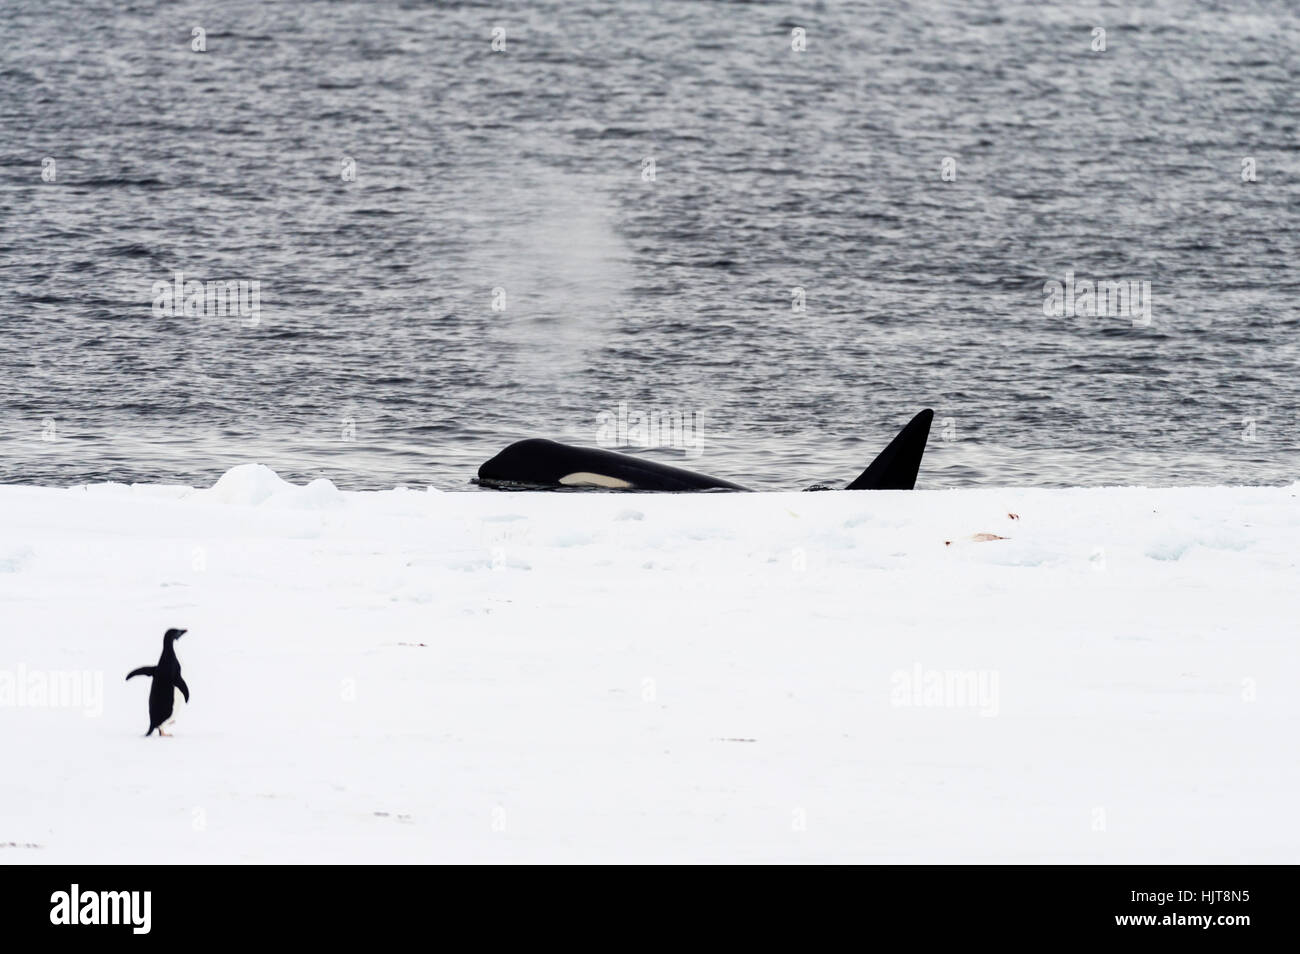 A Killer Whale hunting along the sea ice edge near an Adelie Penguin in Antarctica. Stock Photo